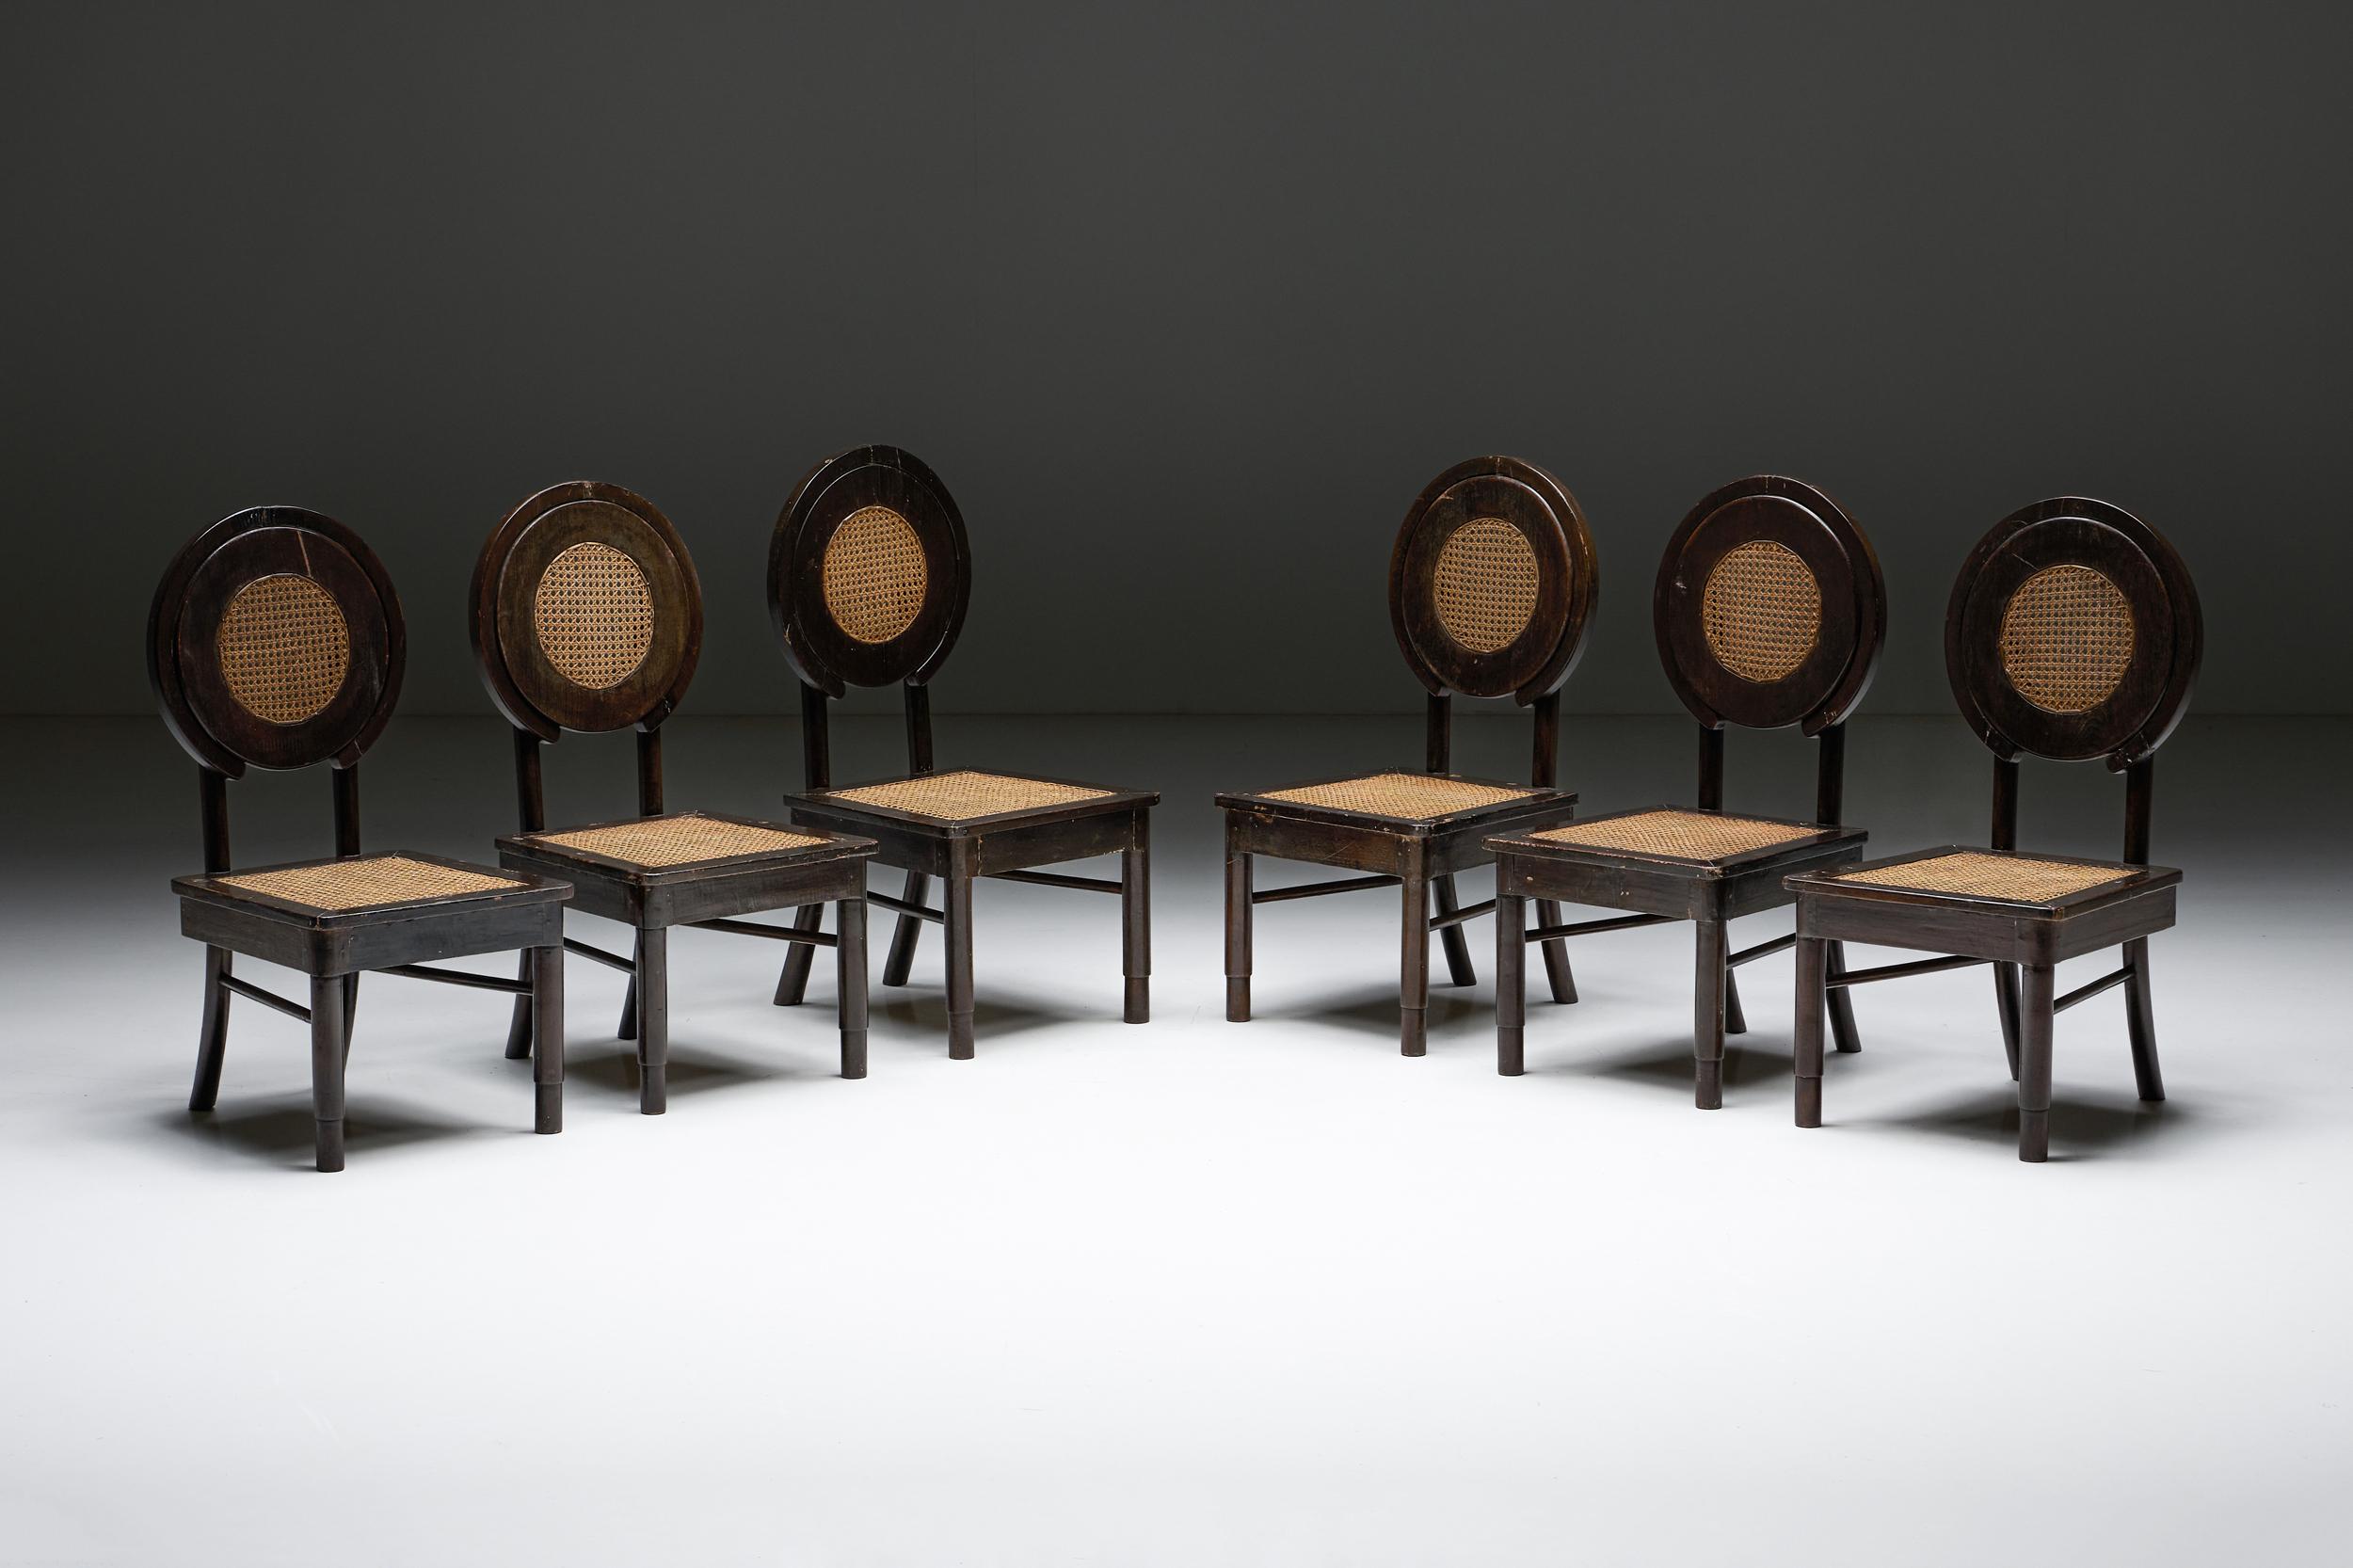 Dining Chairs; Cane Circle Back; Wood; 20th Century; Mid-Century Modern; Sculptural; Cane Work; Rustic; Artisan; Organic Furniture; Europe; Sculptural Chairs; 

Dining chairs with cane circle back and cane seating. Sculptural rustic chairs from